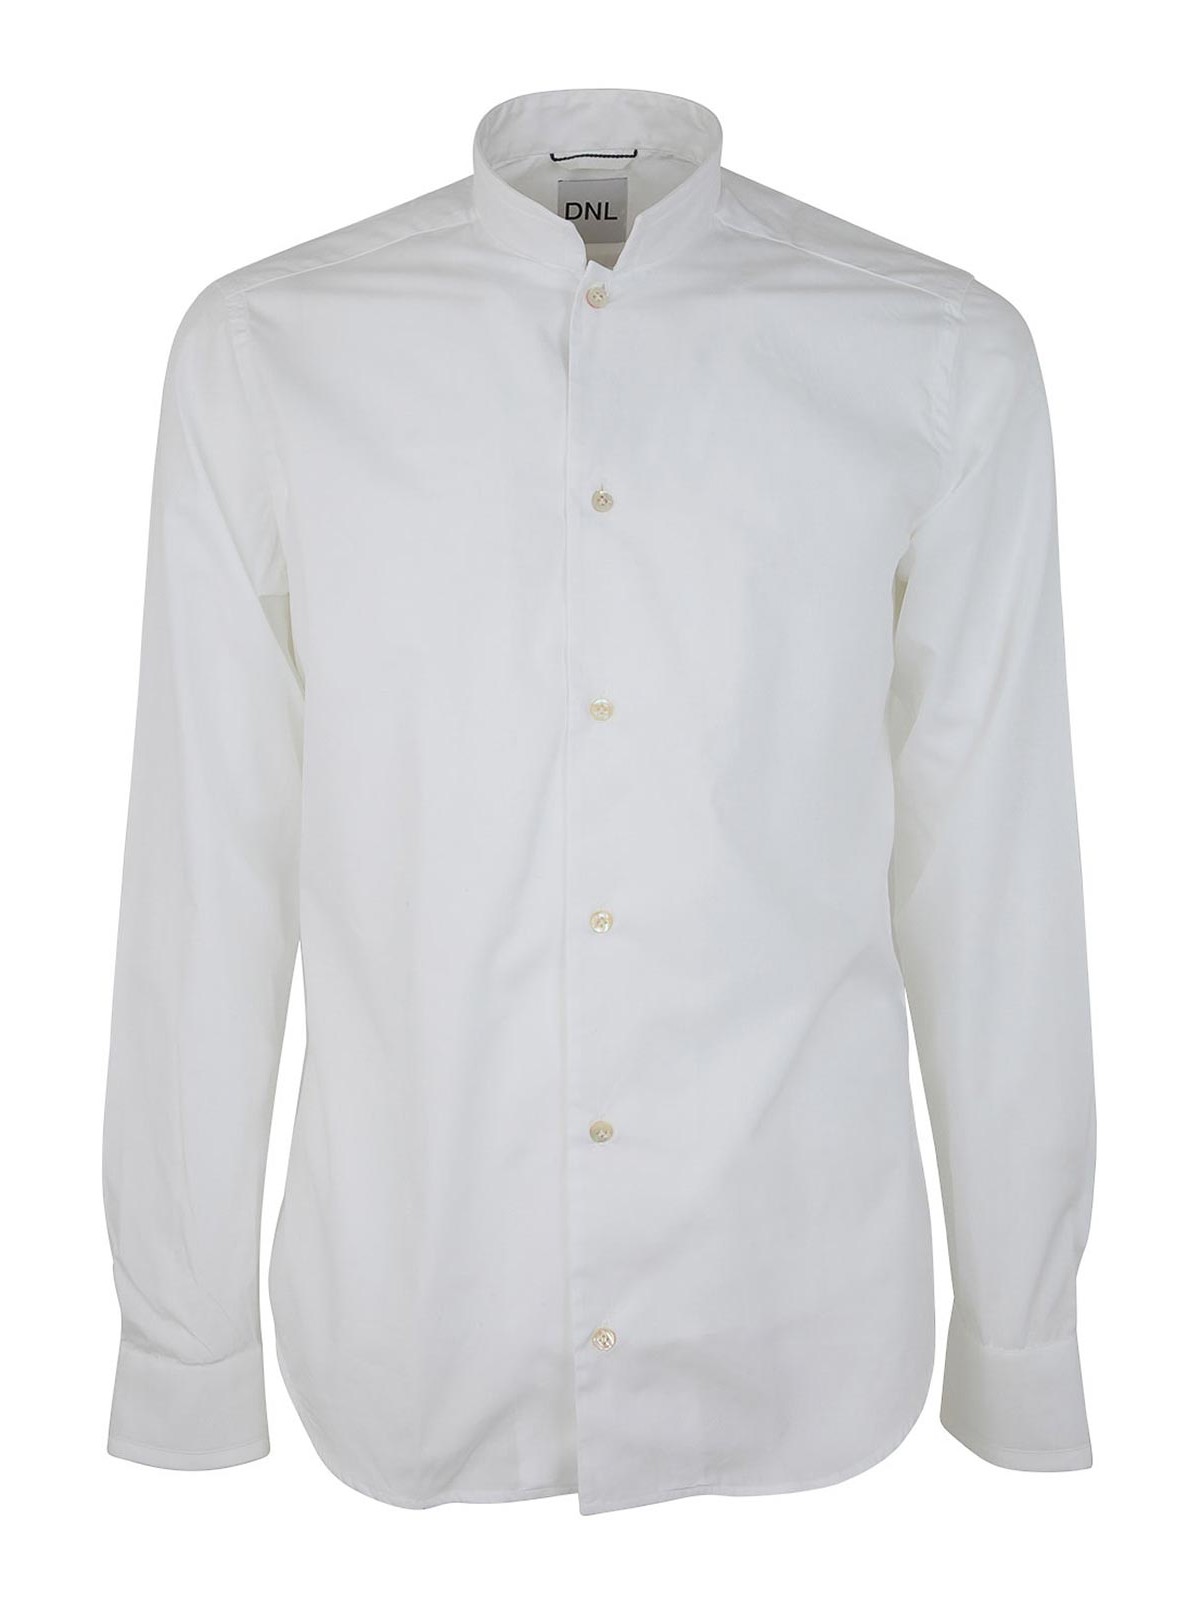 Dnl Shirt In White